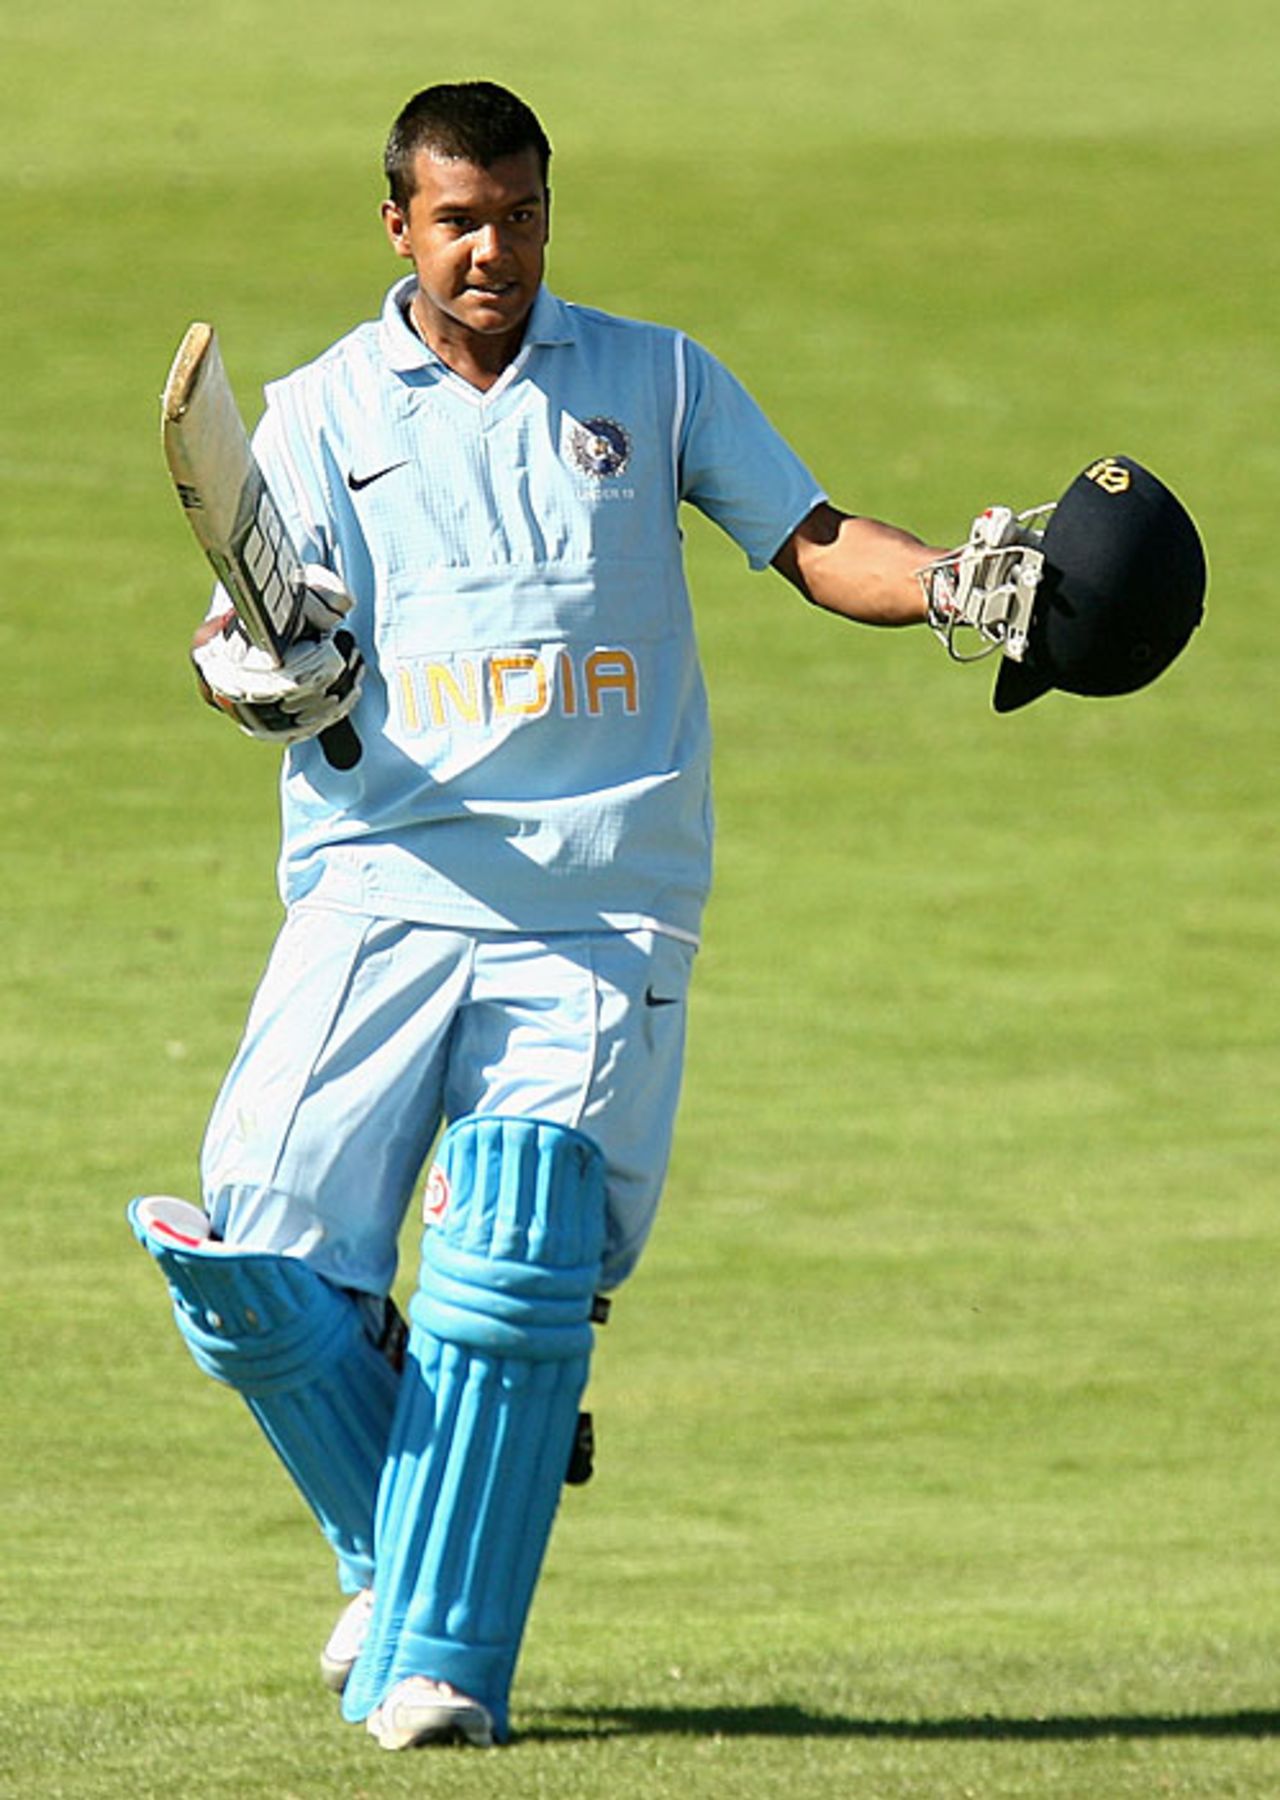 Mayank Agarwal smashed 160 for India Under-19s, Australia Under-19s v India Under-19s, 2nd match, Hobart, April 9, 2009